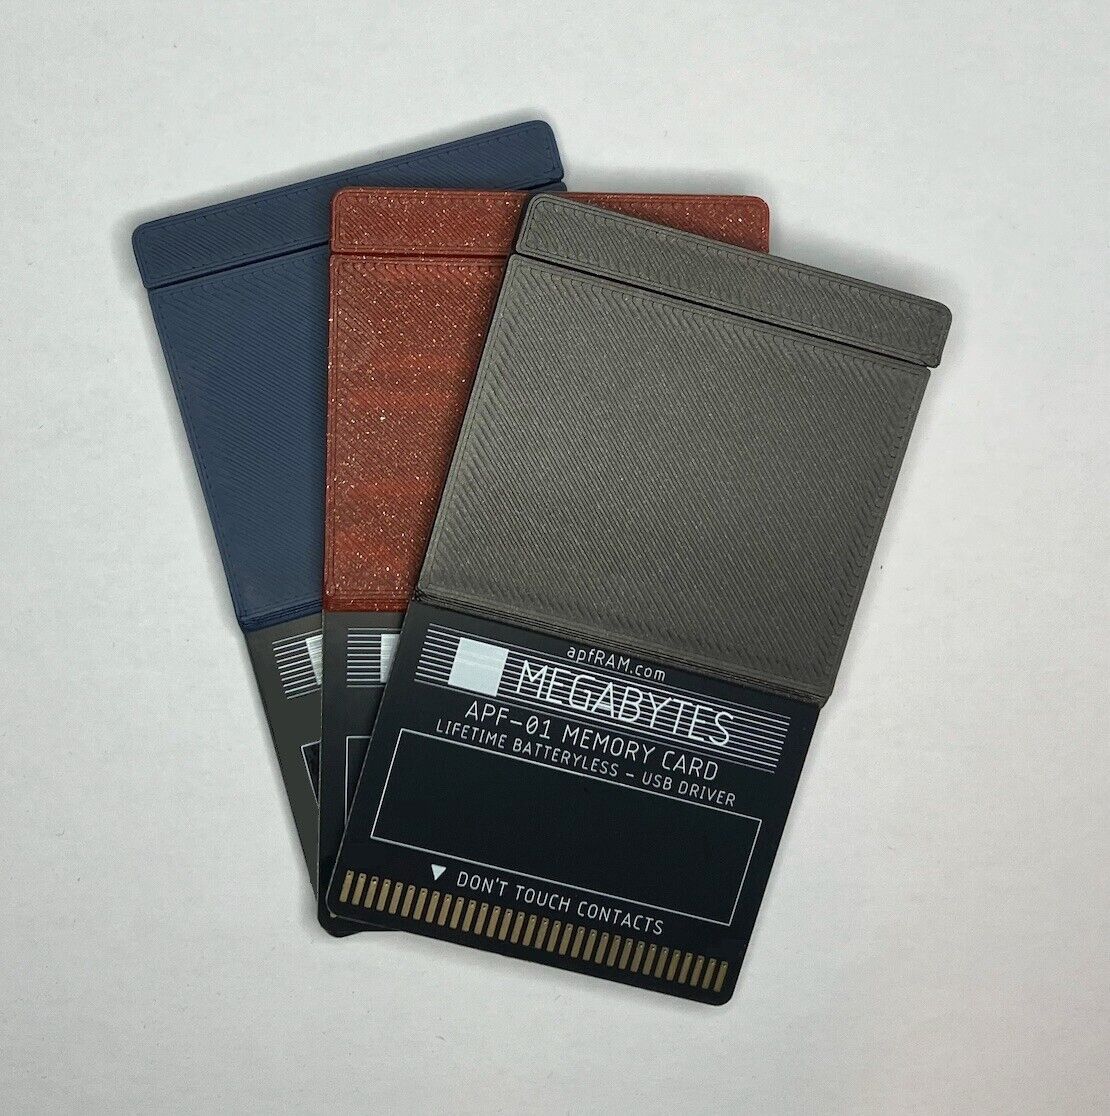 Atari Portfolio 1.9 MegaBytes Card with USB file transfer utility